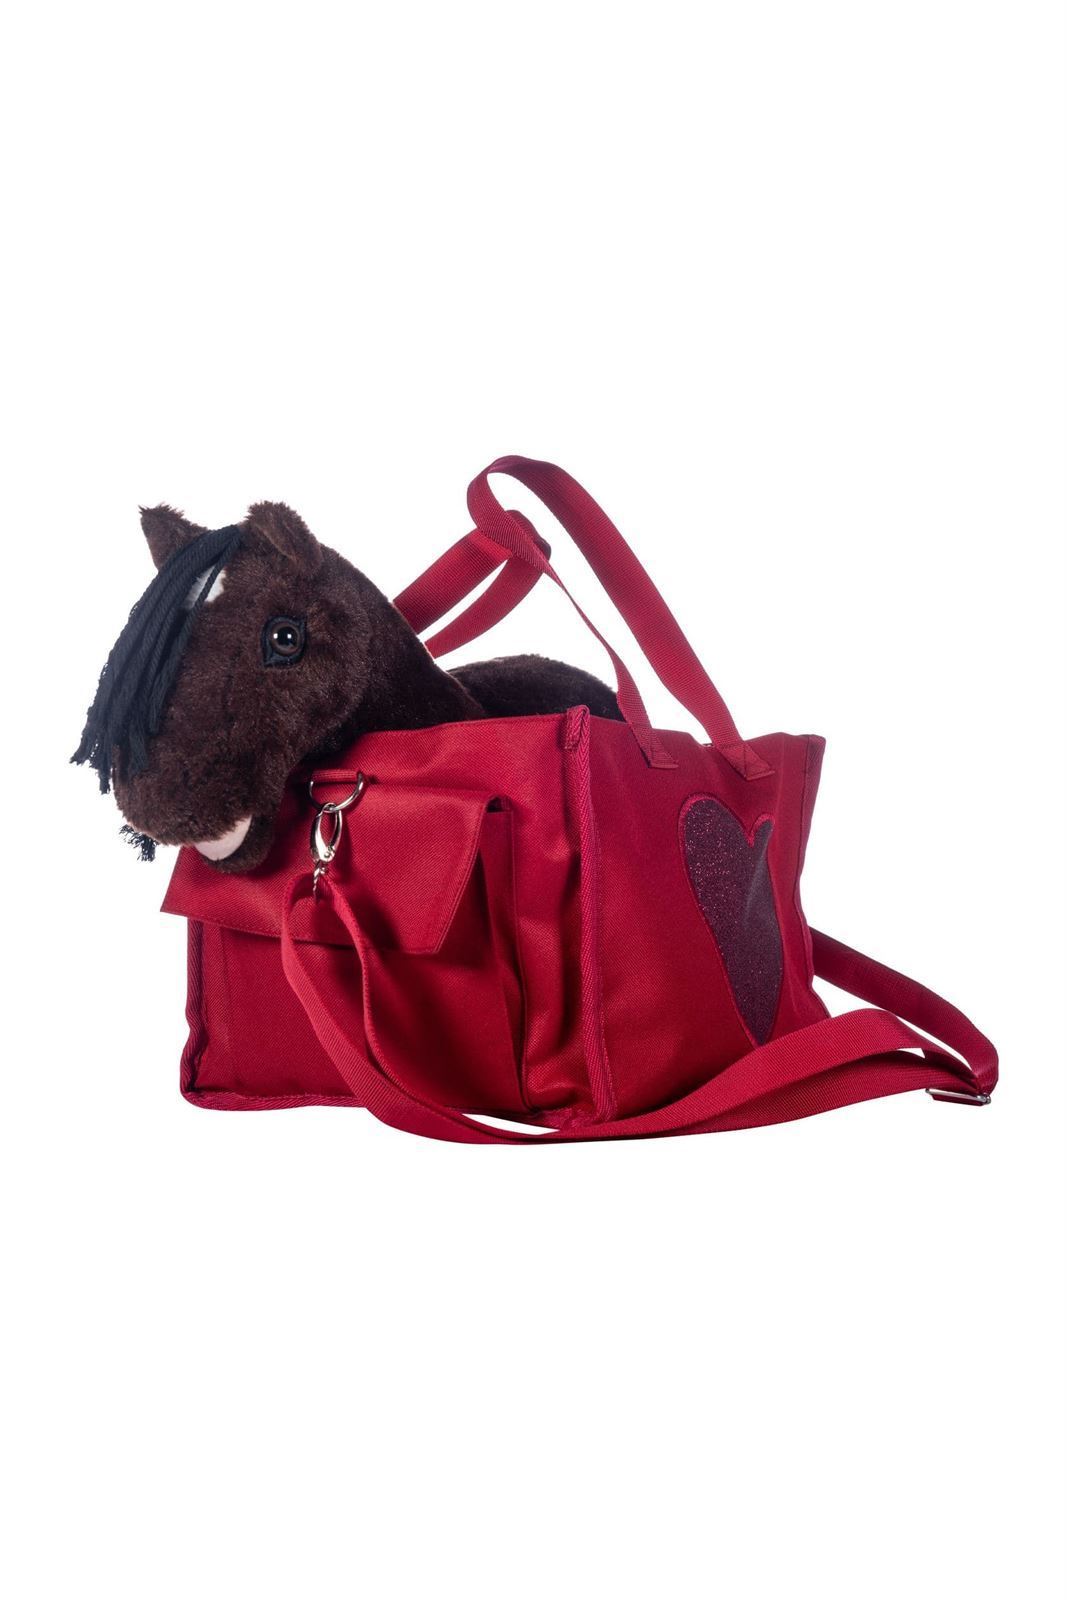 Bolsa transporte Cuddle pony HKM Sports Equipment color rosa fucsia - Imagen 6